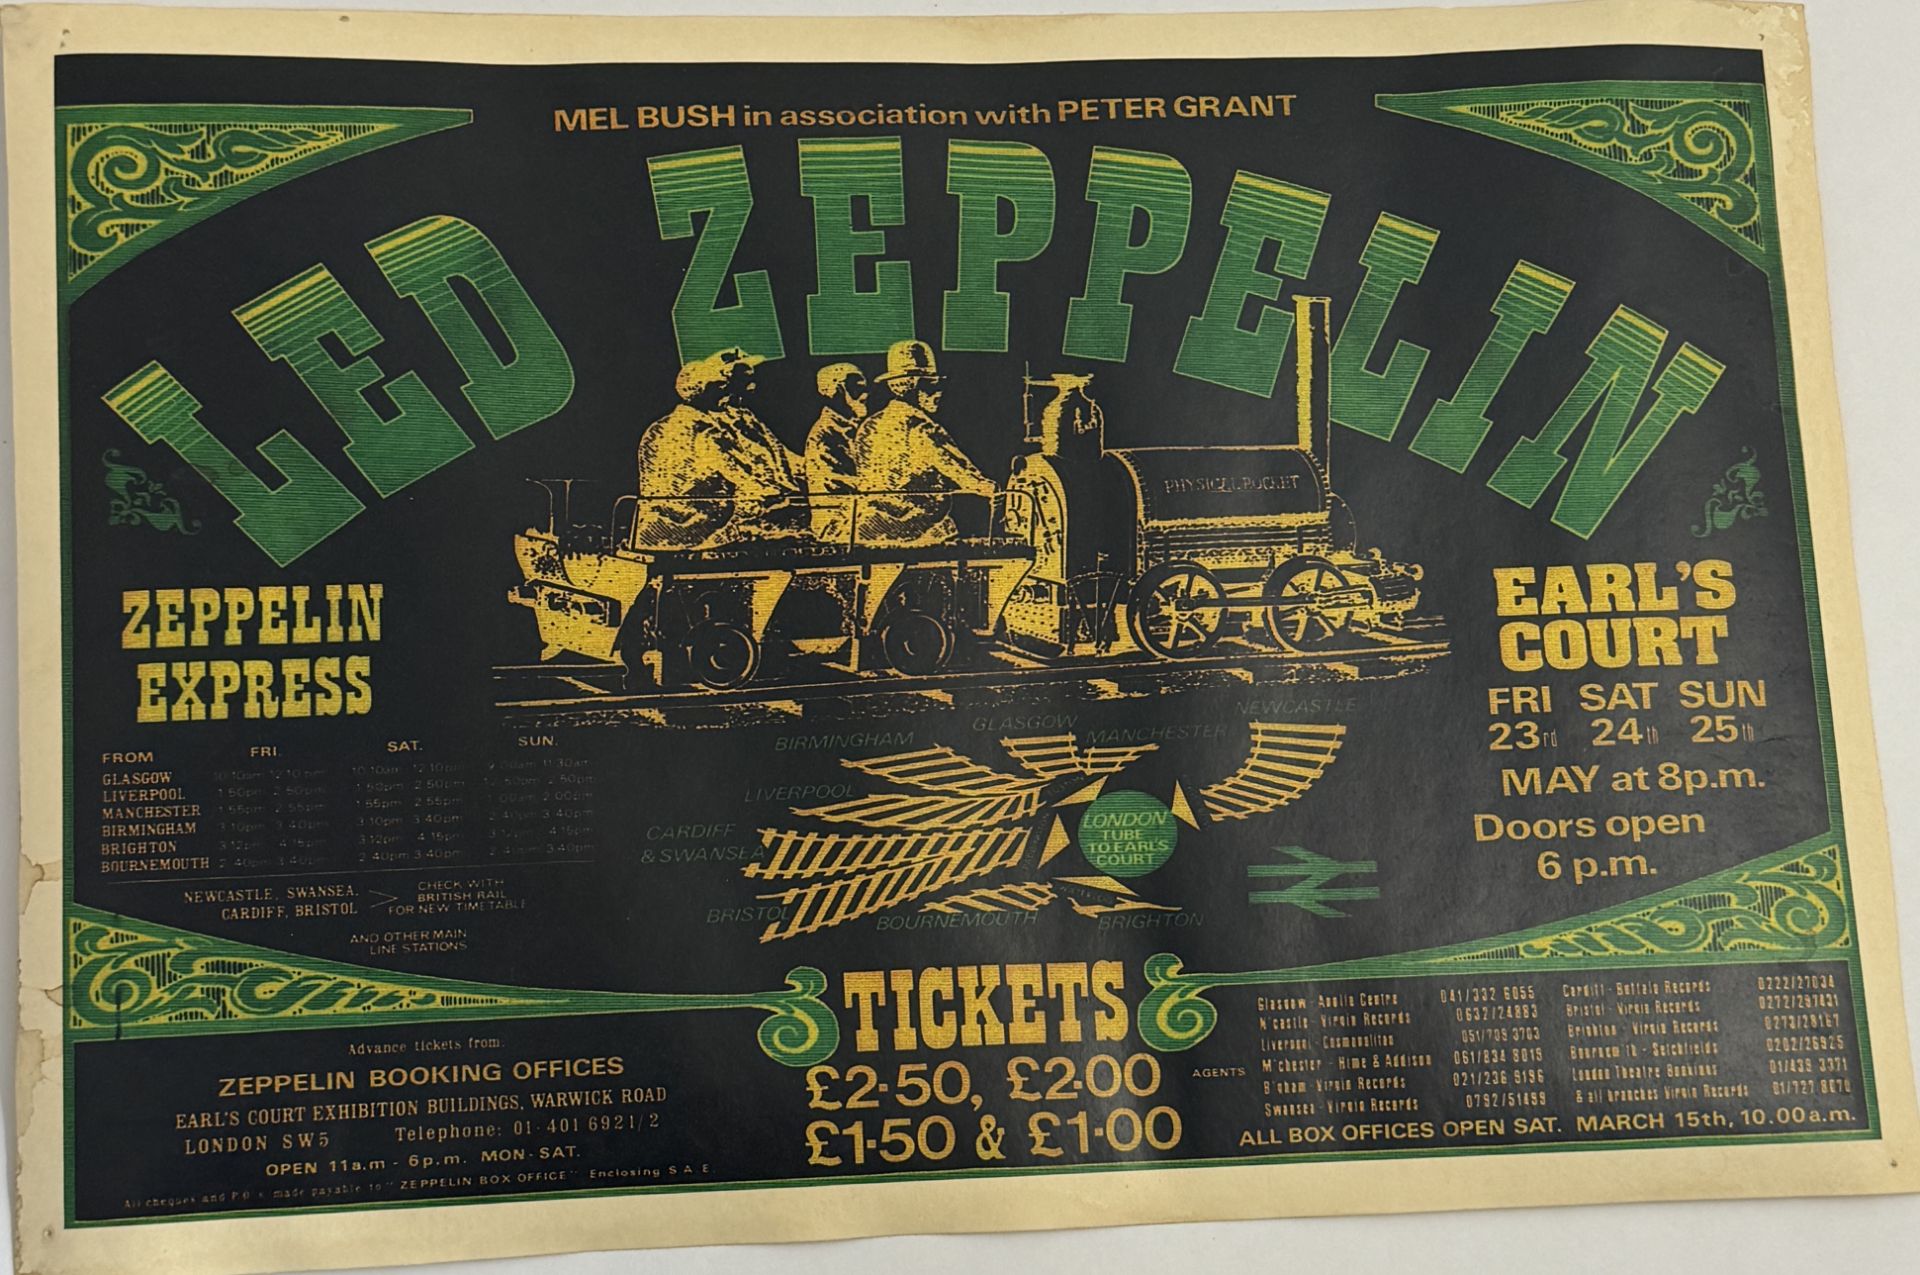 Led Zeppelin Concert Poster